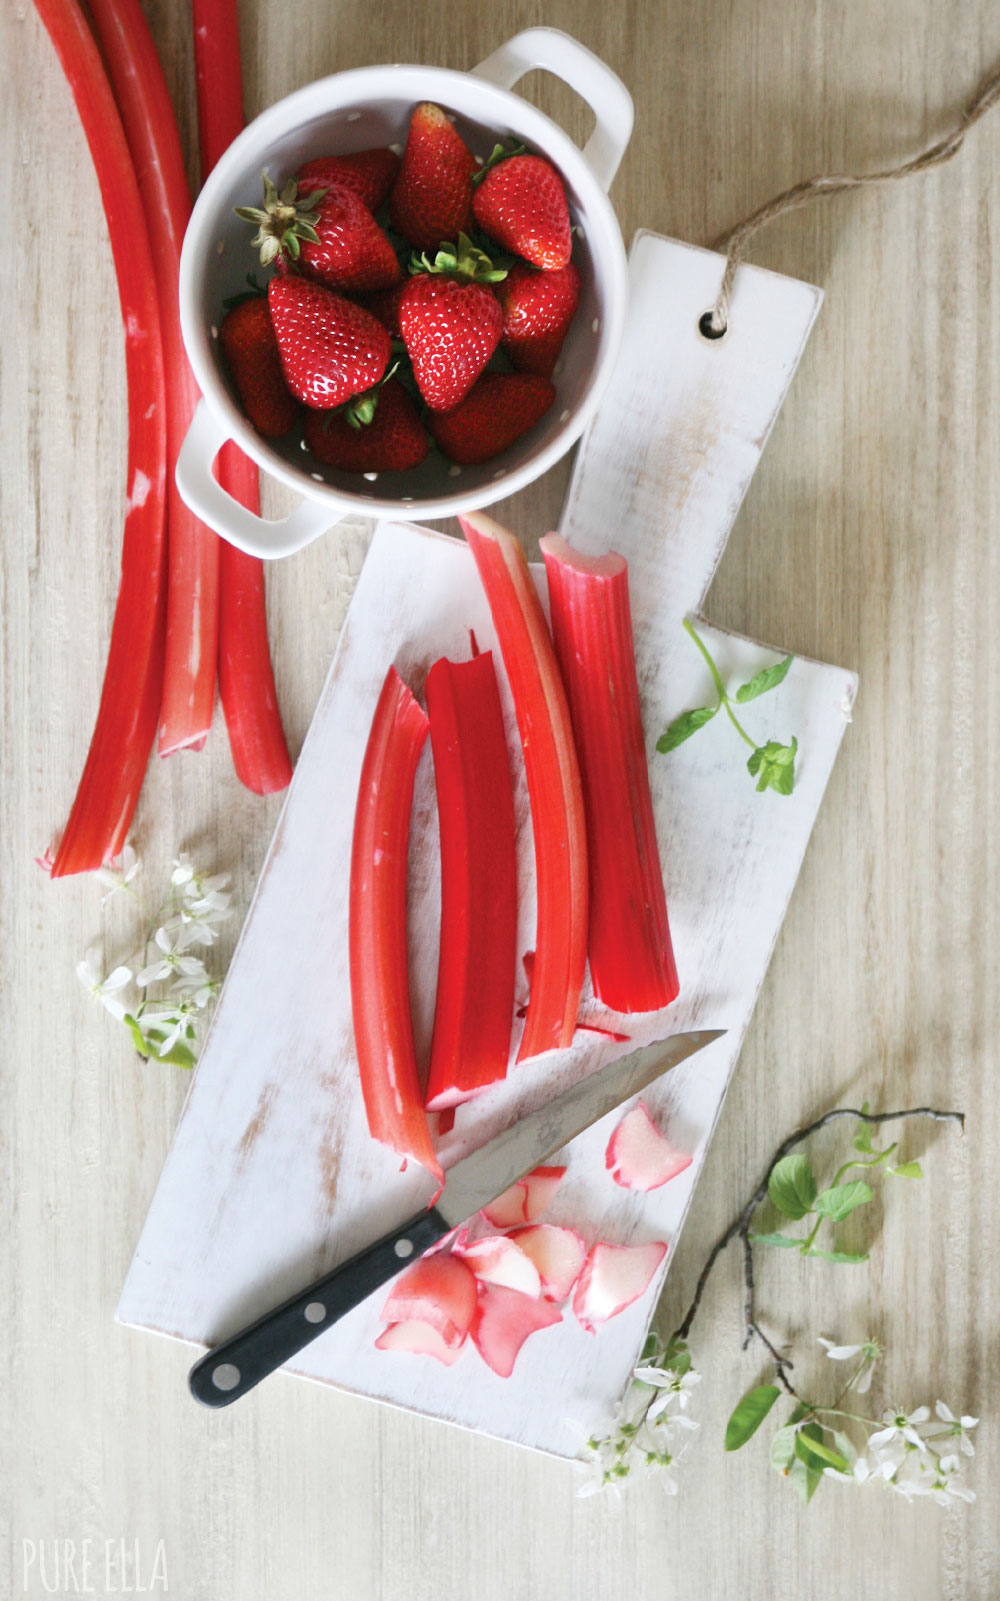 Pure-Ella-Gluten-free-vegan-Strawberry-Rhubarb-Crumble-Pie3